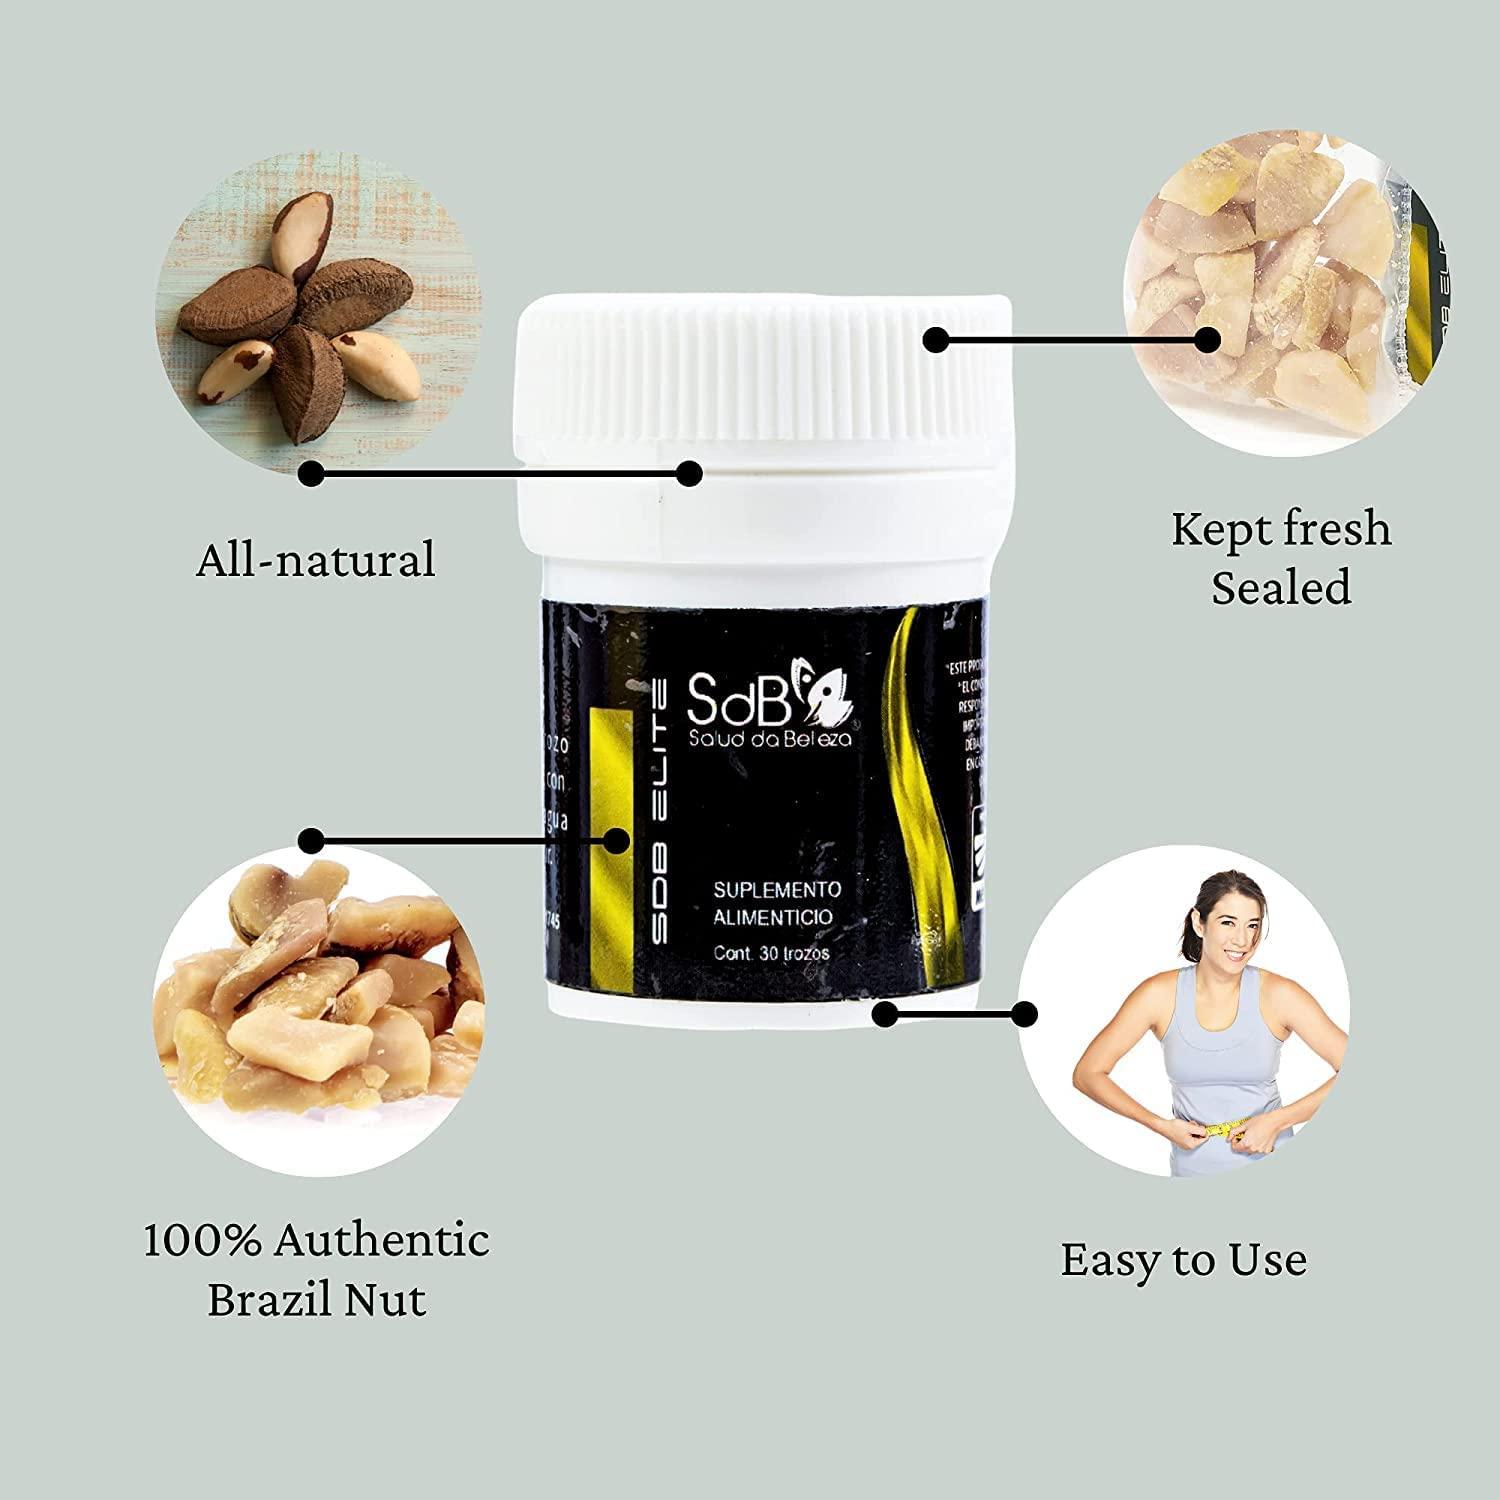 New! Semilla de Brazil 100% Authentic Brasil Seed Supplement 100% Original!